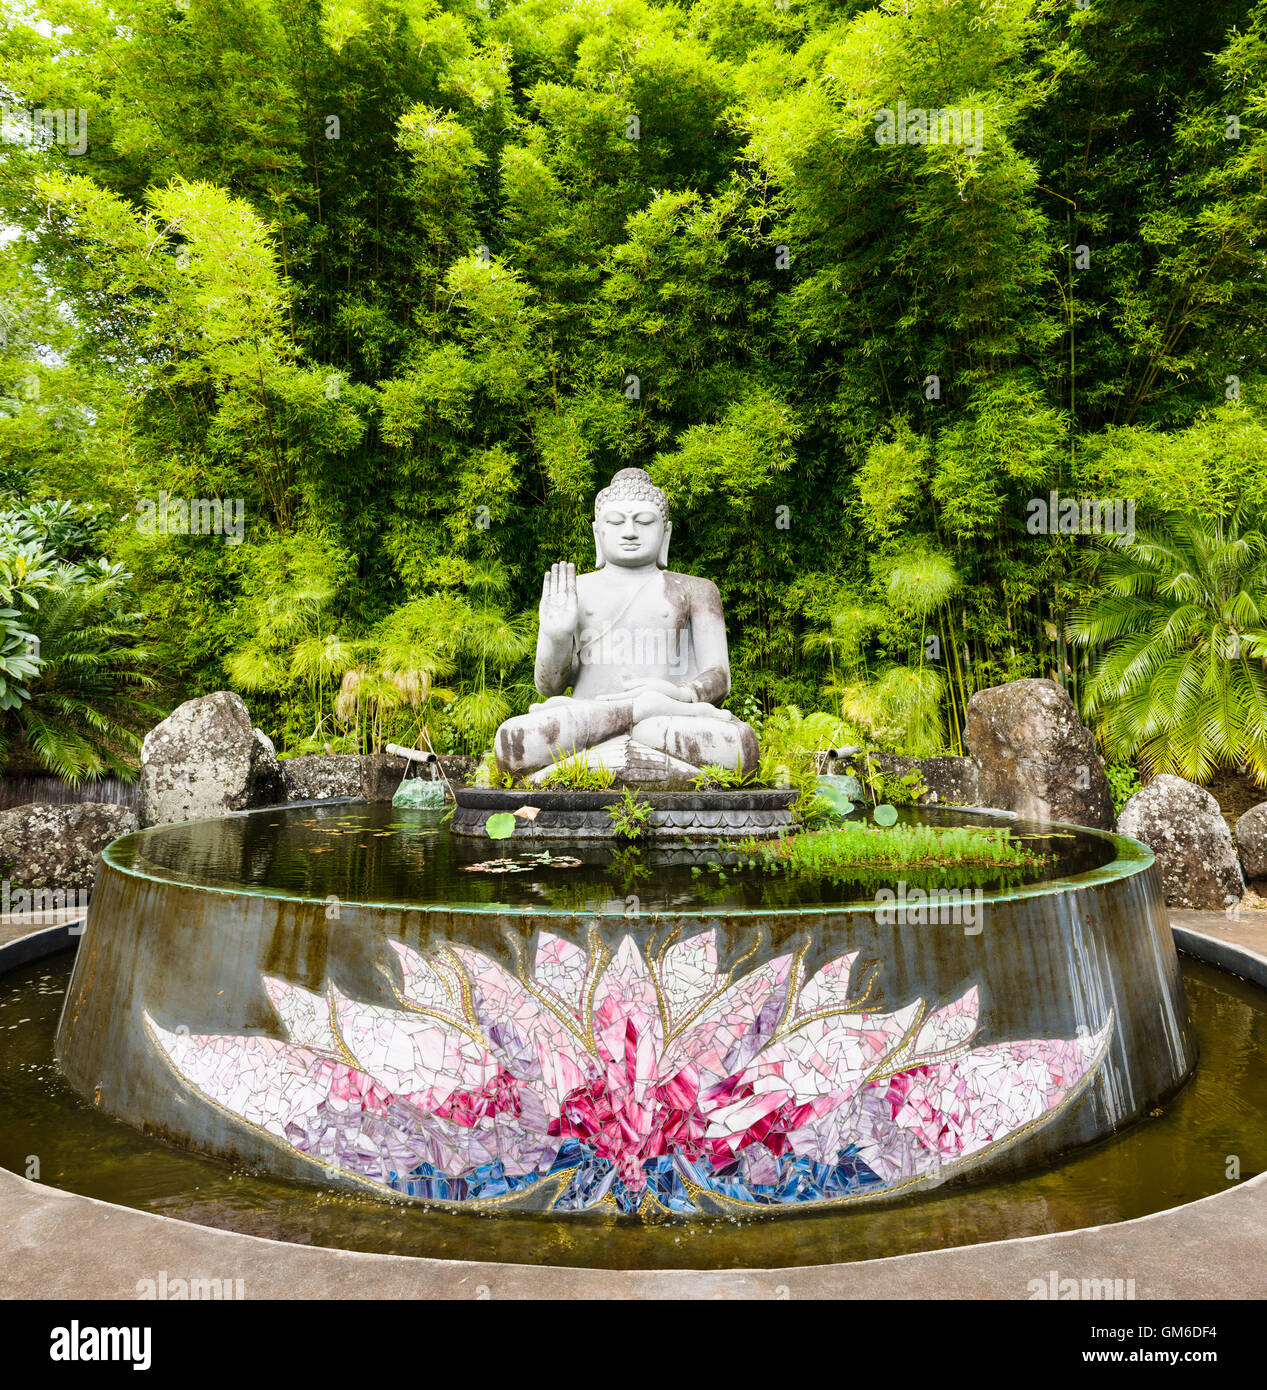 The Buddha and Lotus Pond at Crystal Castle And Shambhala Gardens, close to Byron Bay. Stock Photo